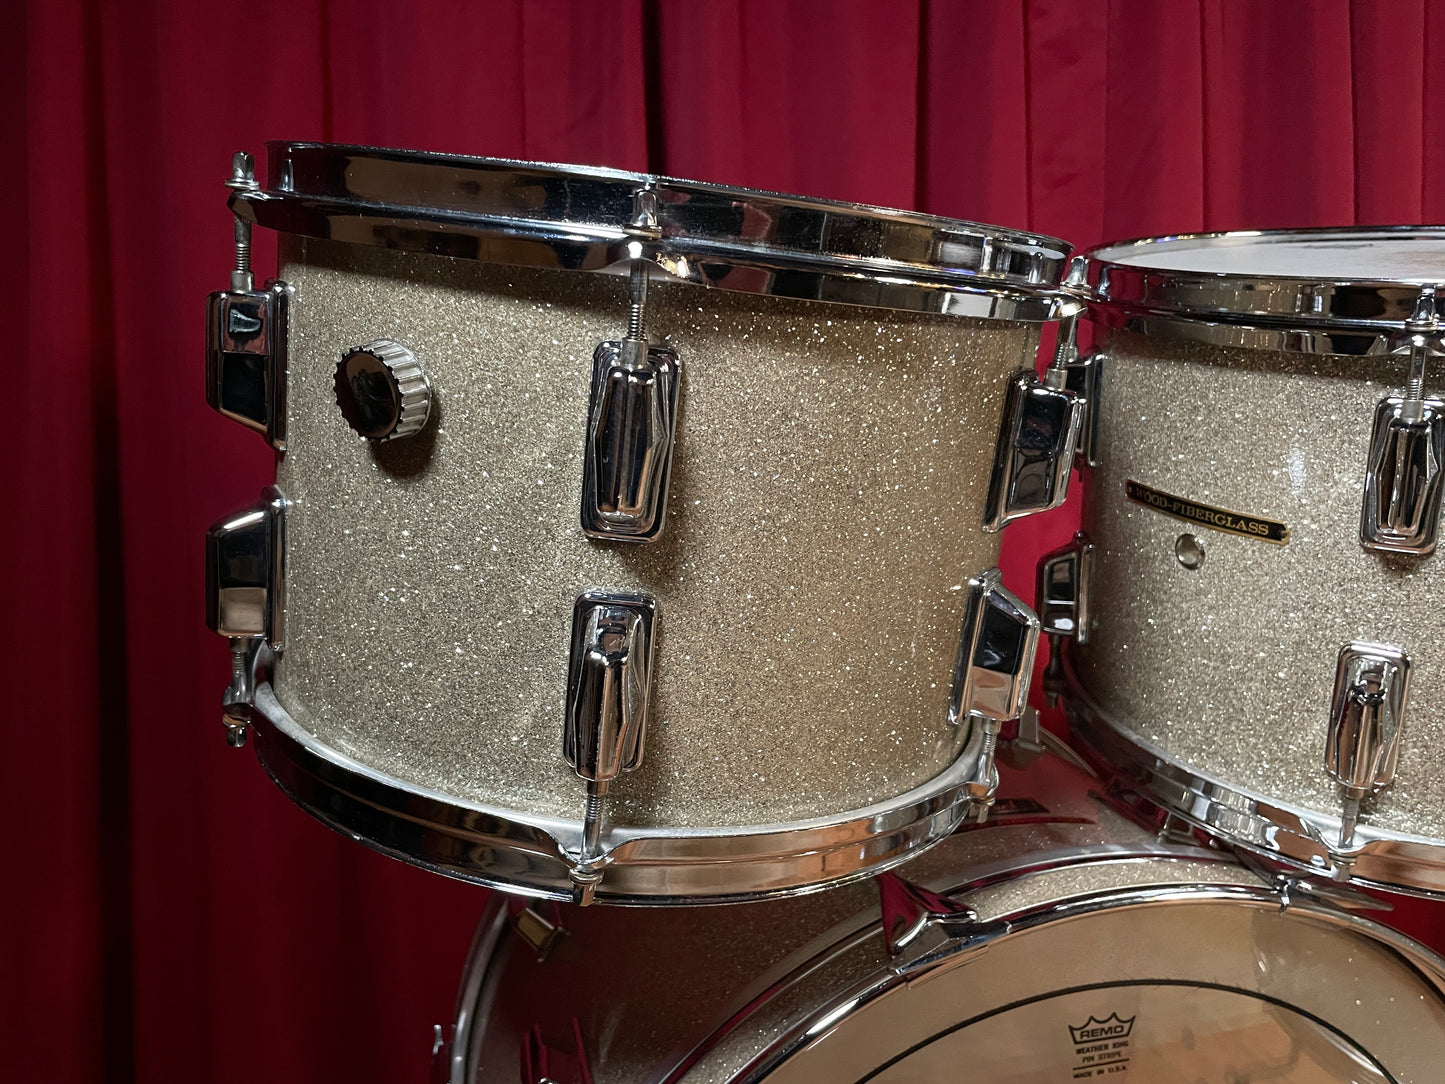 1970s Pearl Wood Fiberglass Drum Set 22/12/13/16 Silver Sparkle *Video Demo*